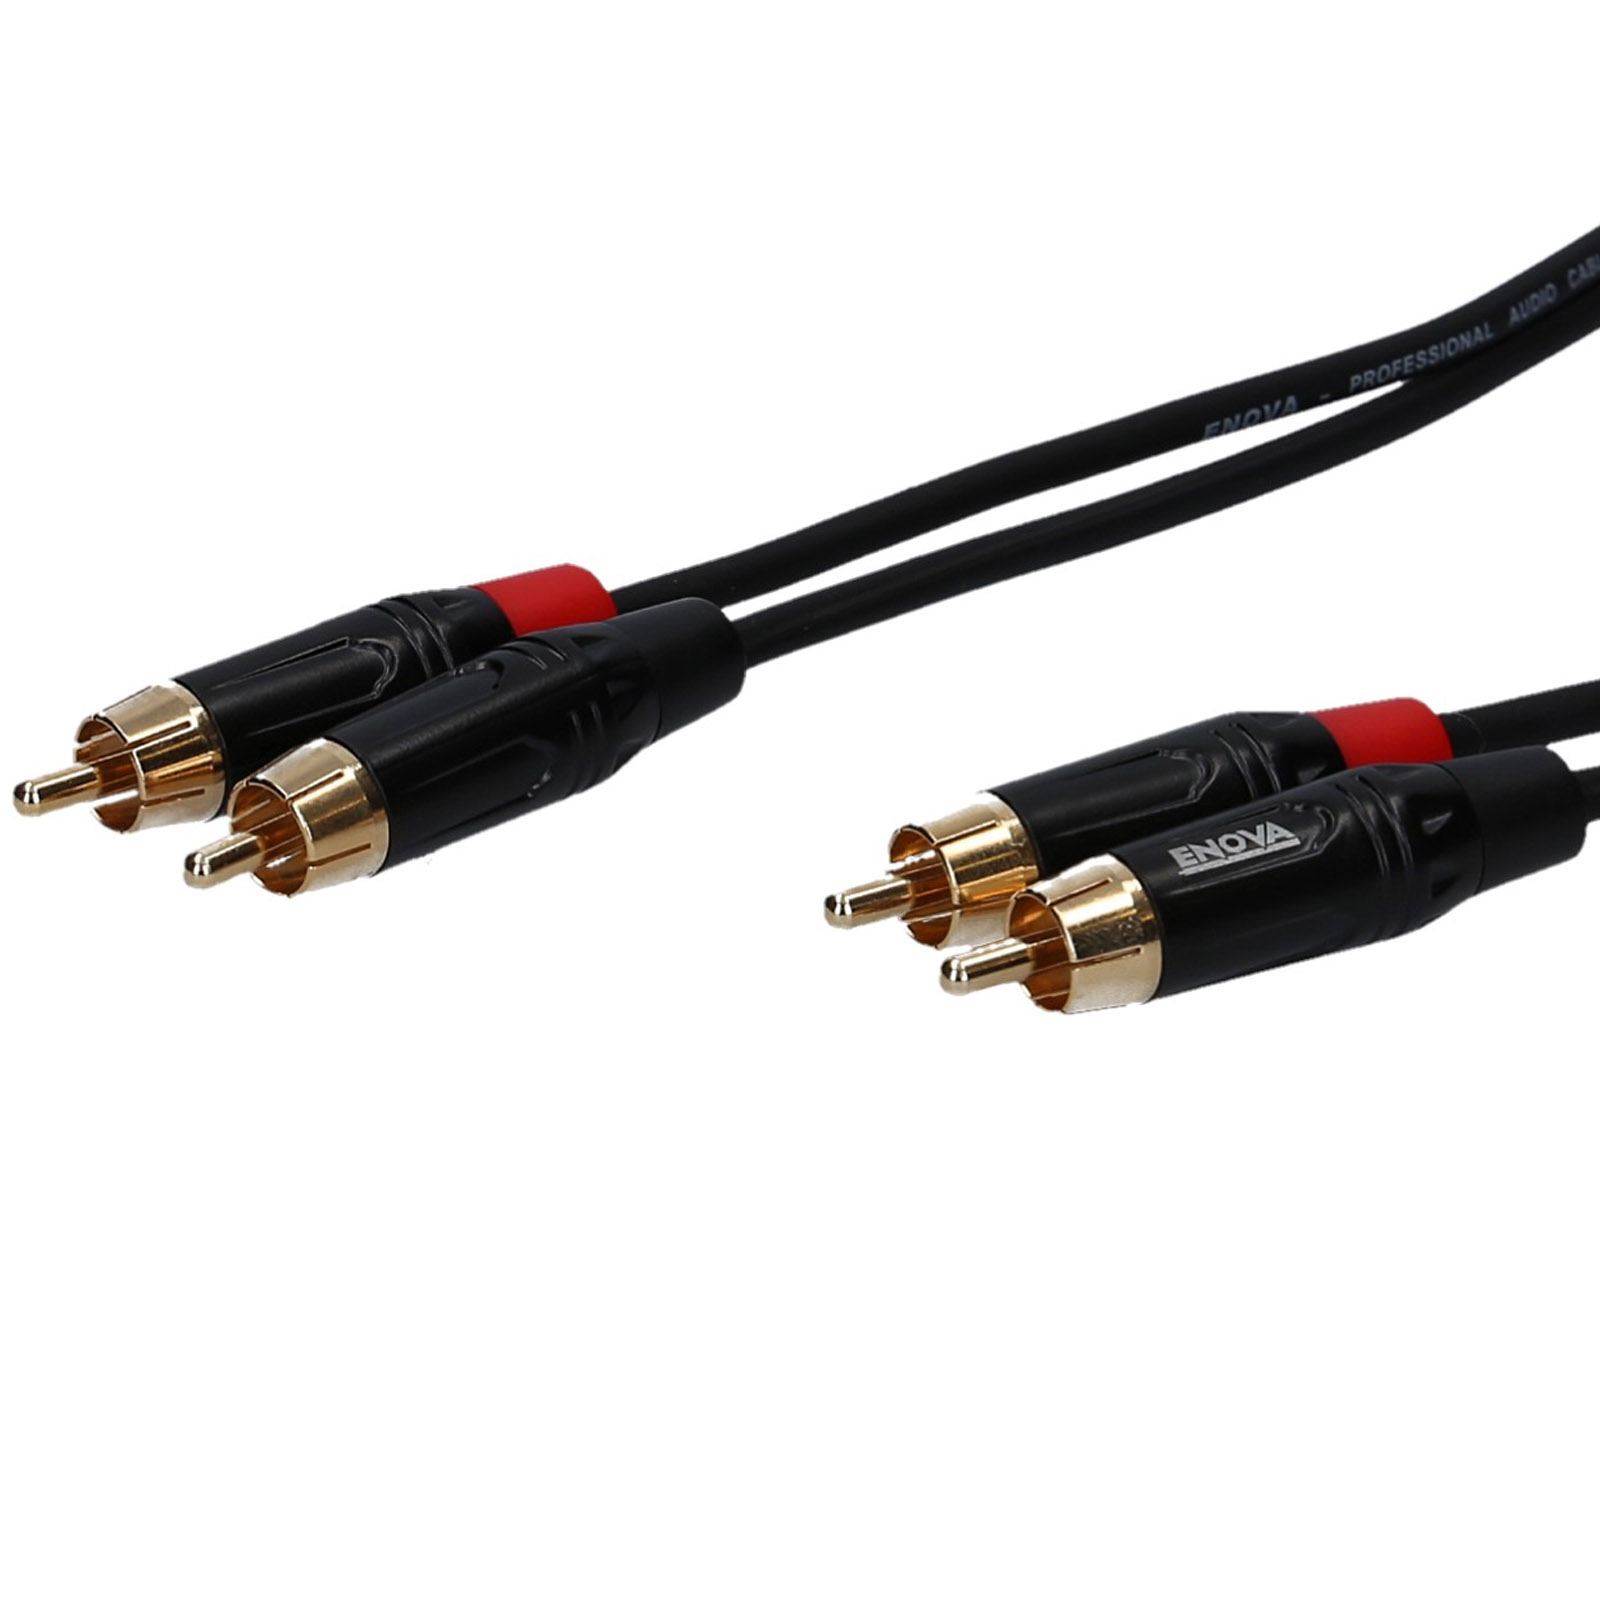 ENOVA male Kabel, RCA & m Kabel stereo, schwarz 3 Cinch 3 rot Audio m